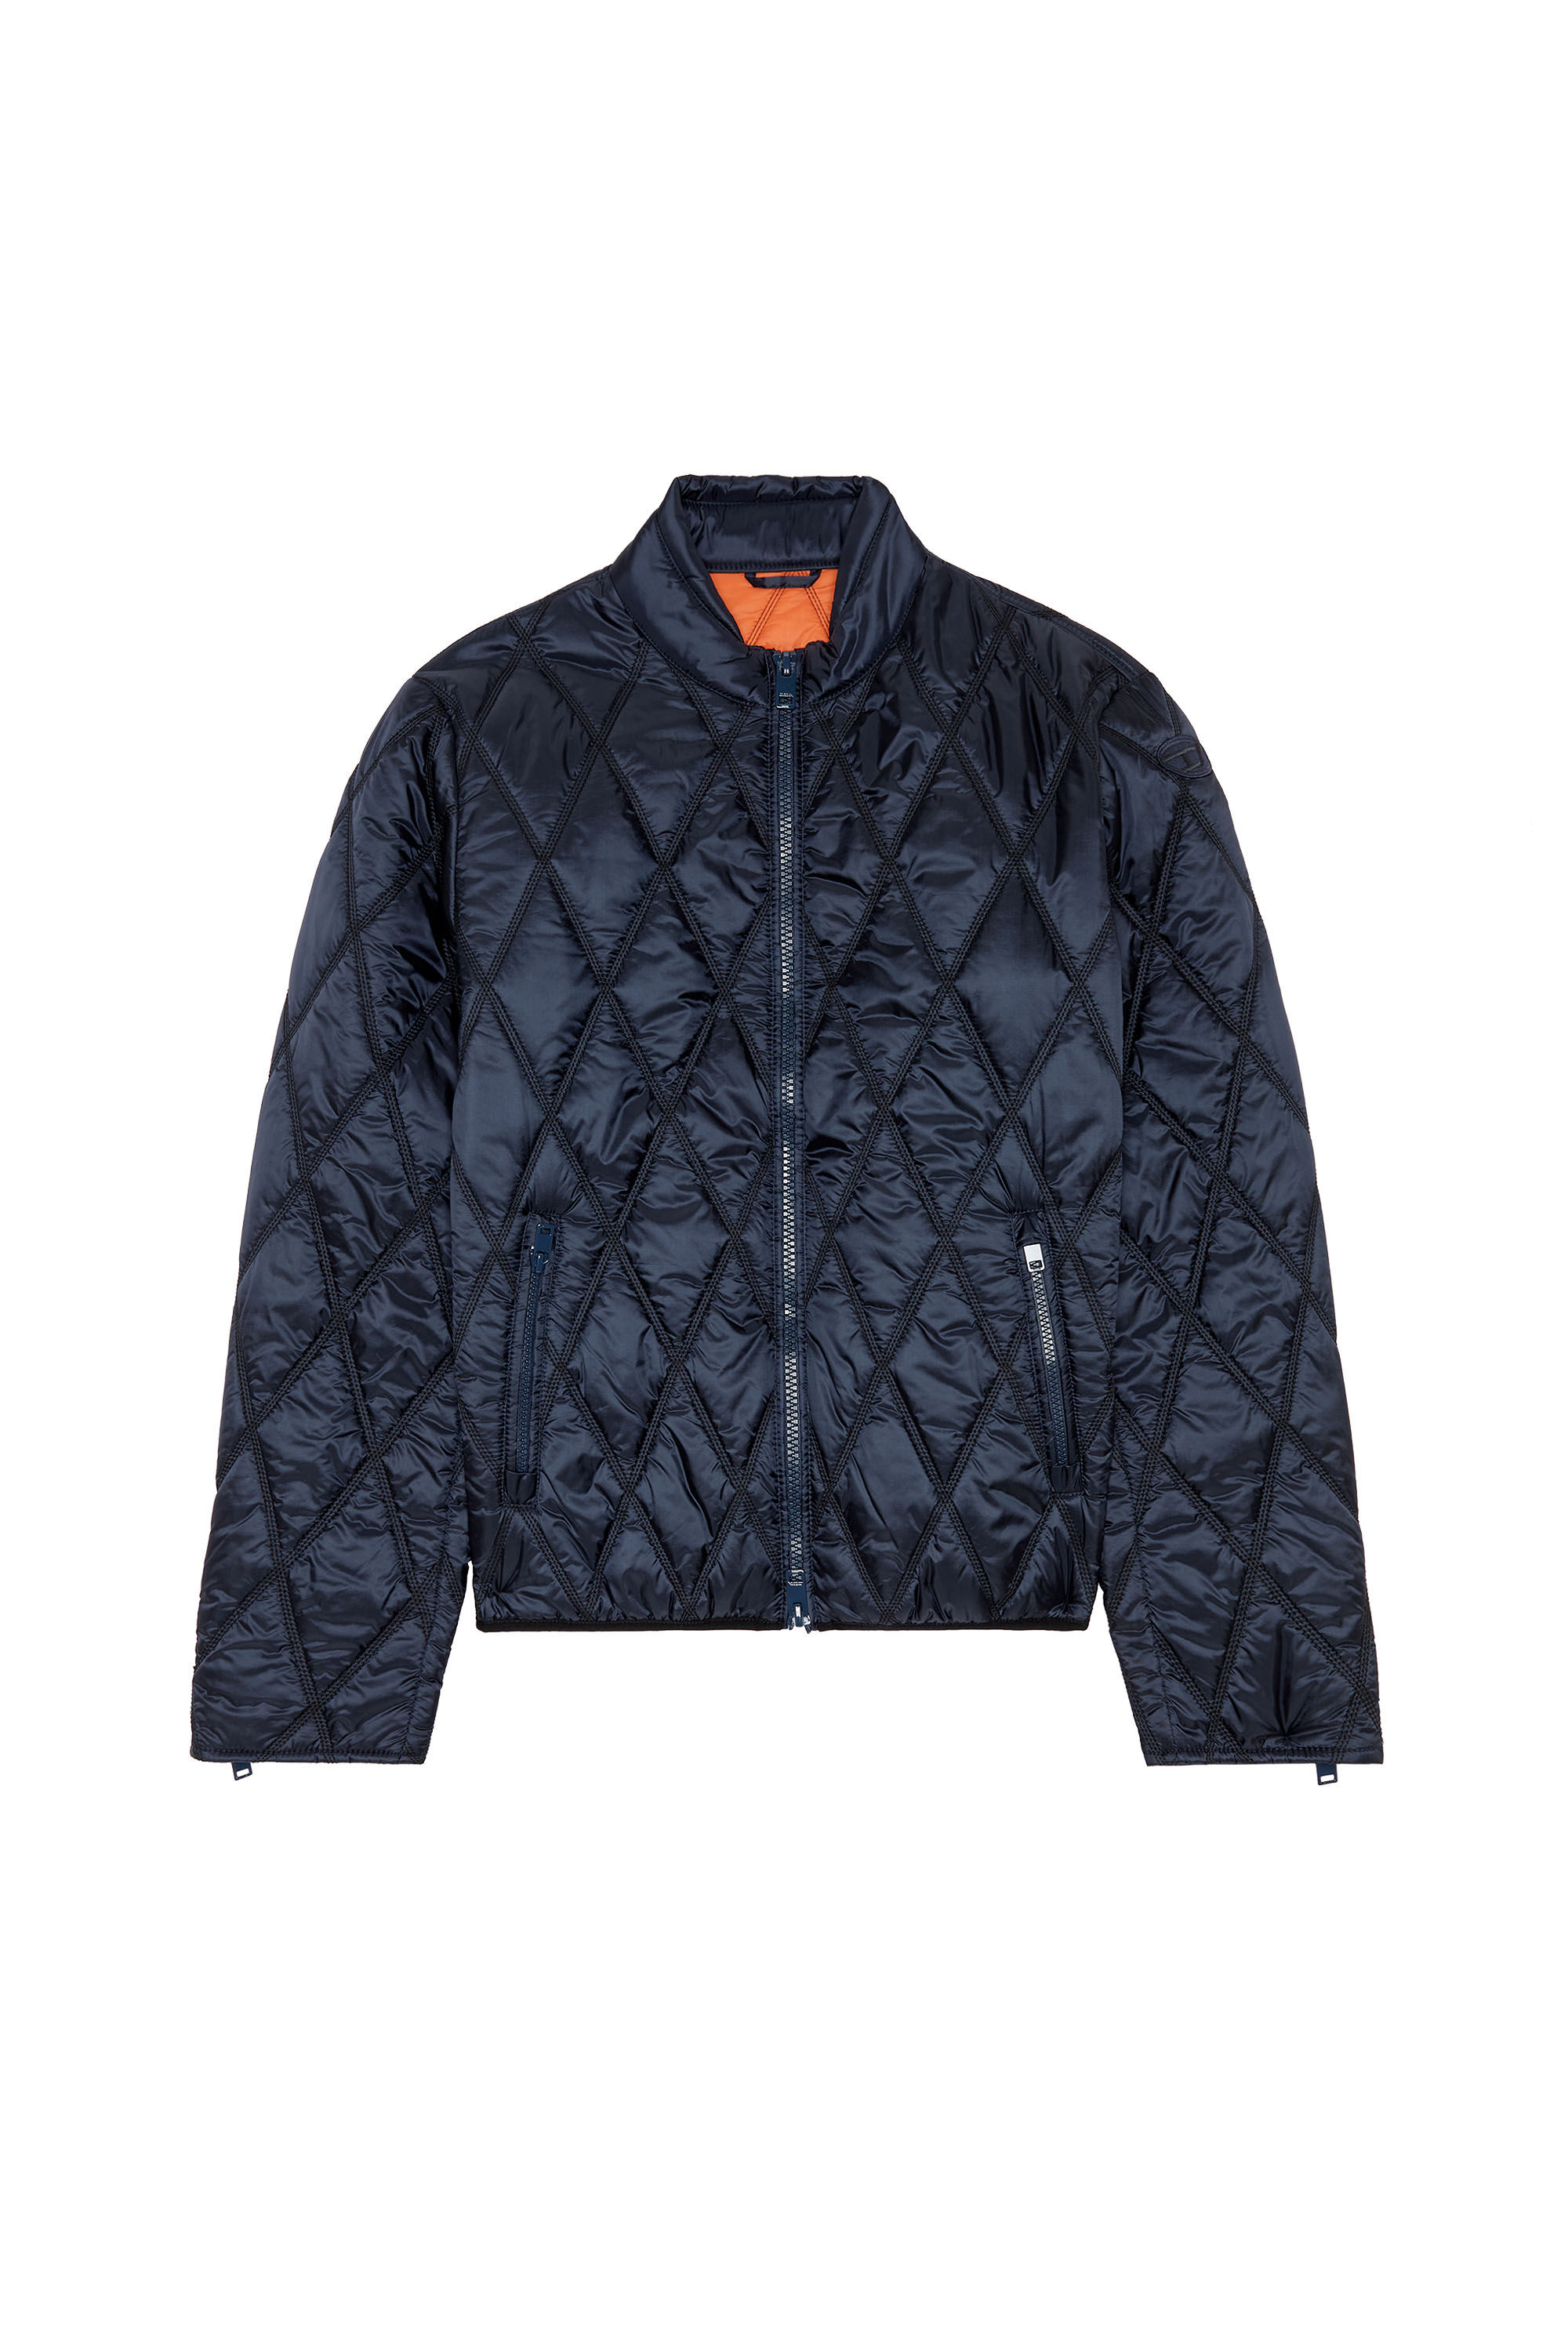 Diesel - J-NIEL, Man Mock-neck jacket in quilted nylon in Blue - Image 6